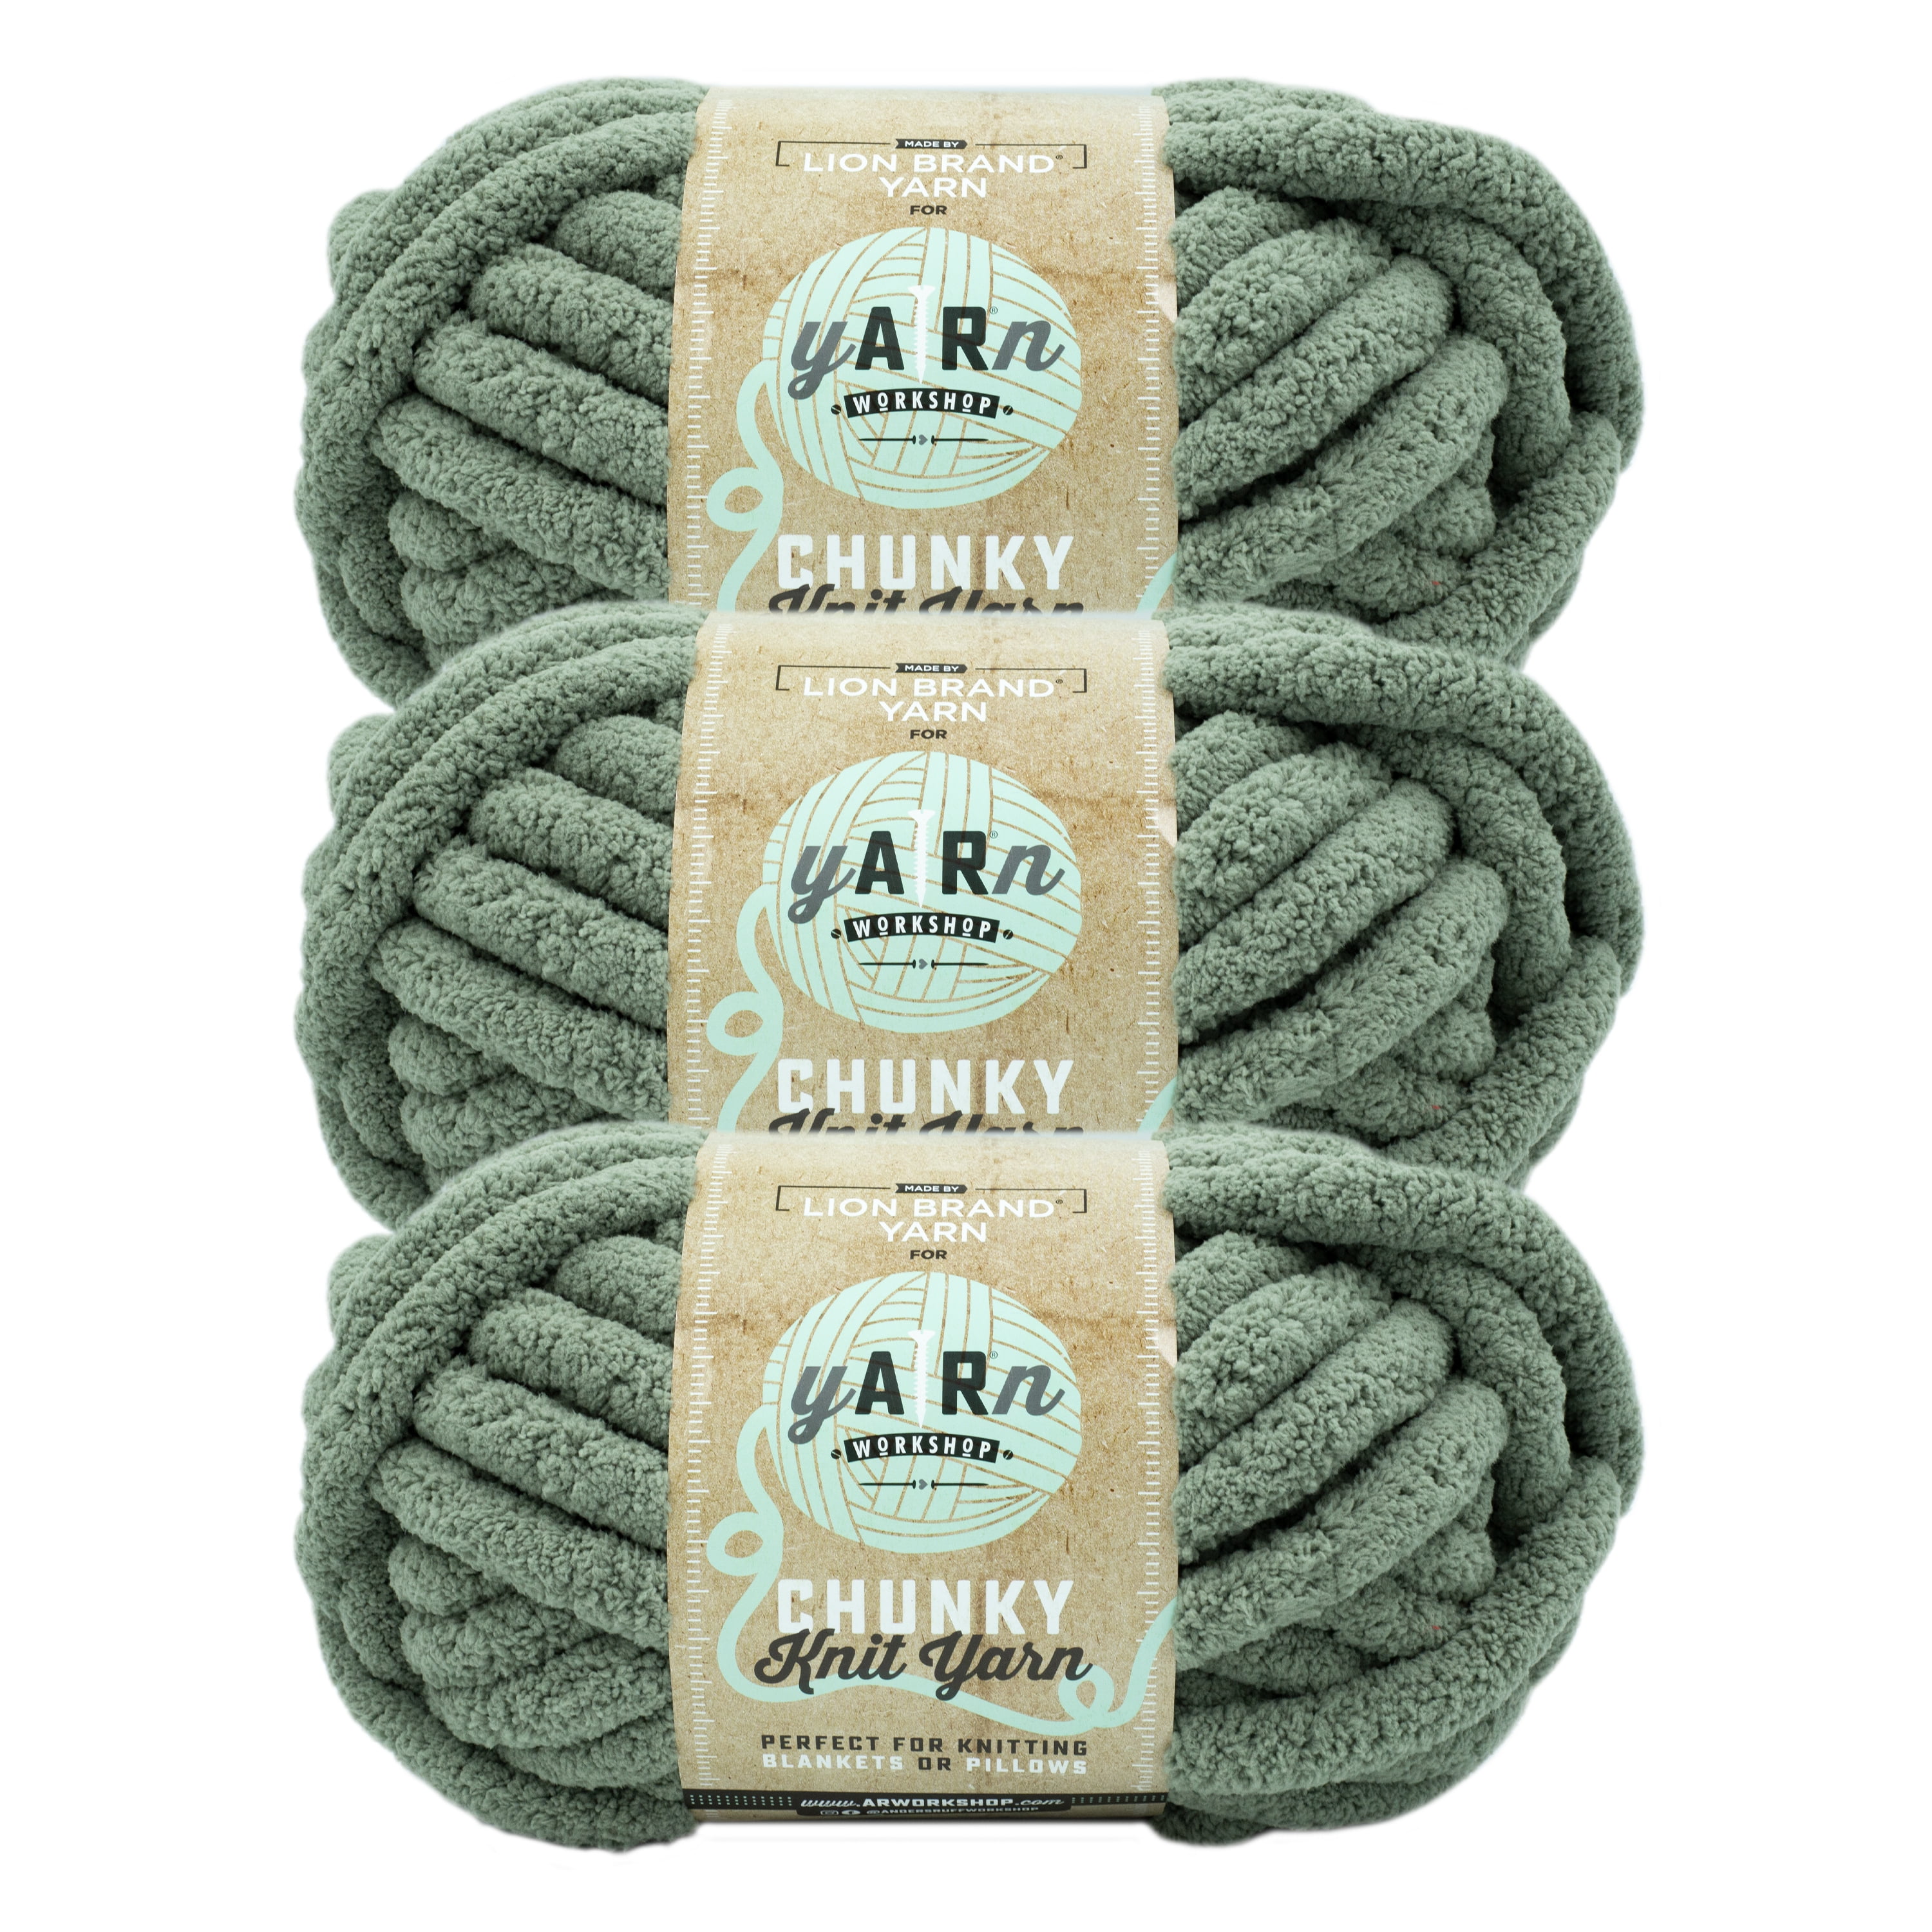  Abaodam 200 Pcs Handmade Label Knitting Supplies